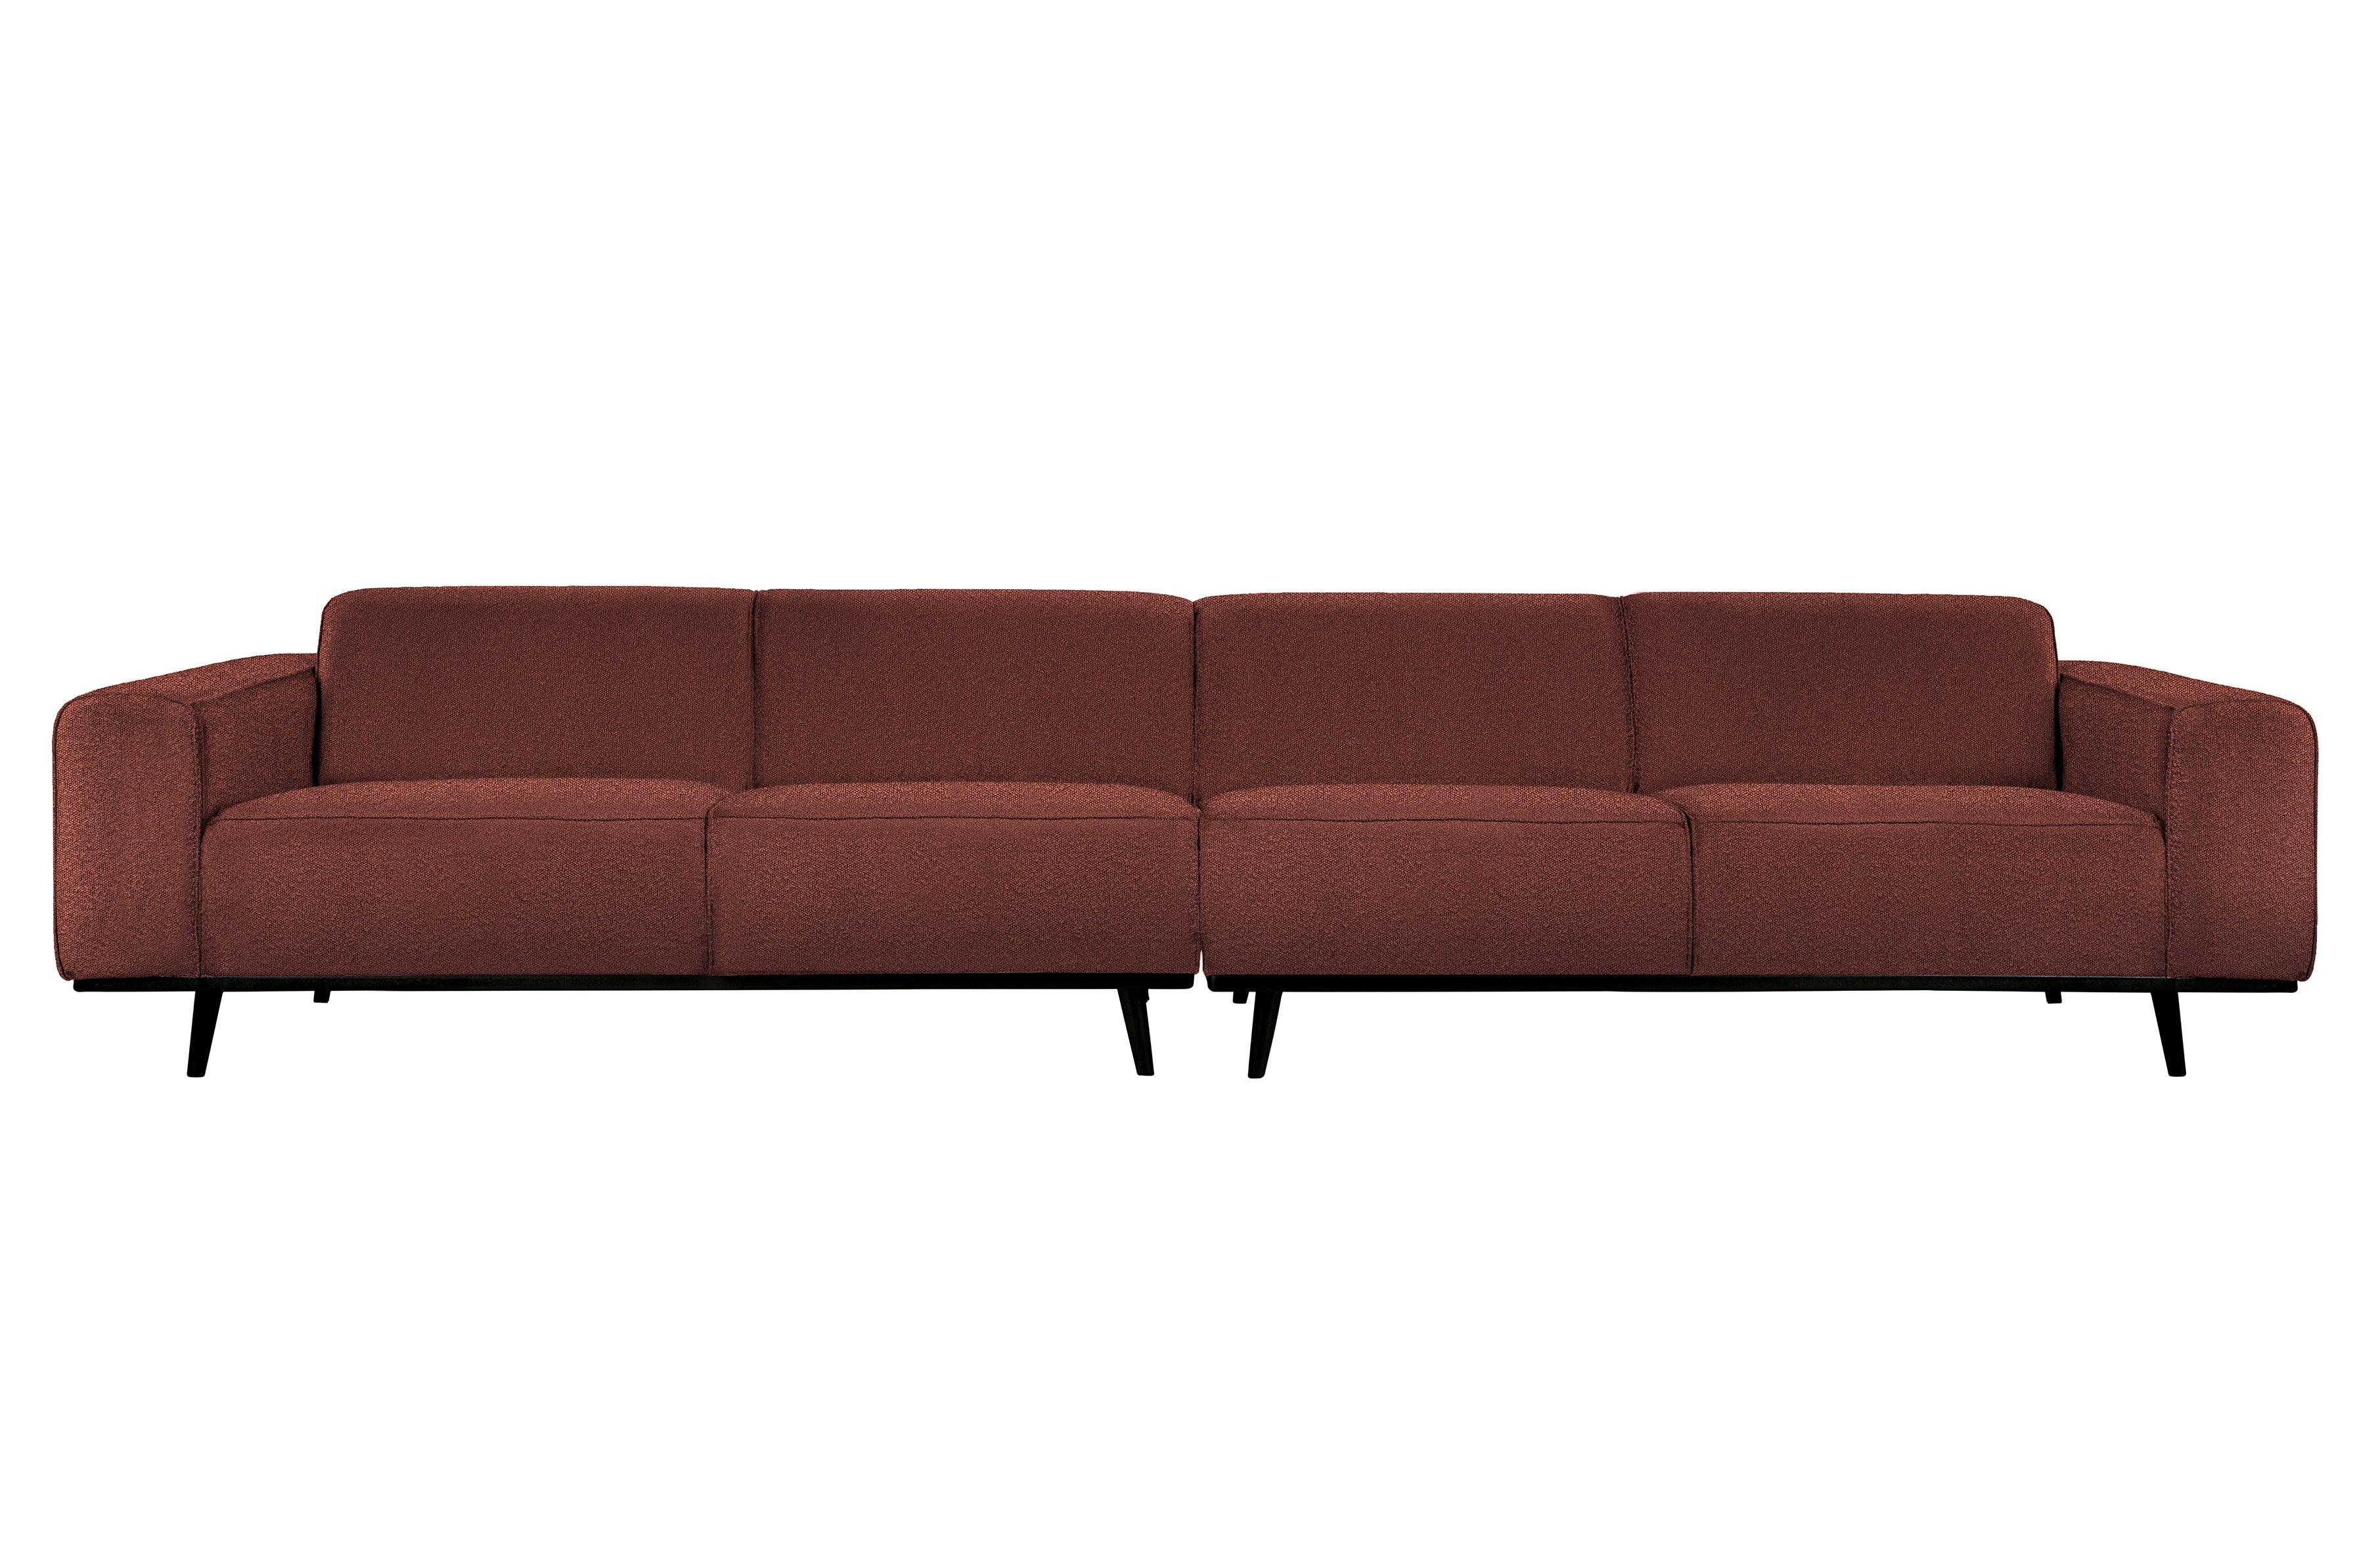 Sofa 4-osobowa STATEMENT boucle kasztanowy Be Pure 372 cm   Eye on Design